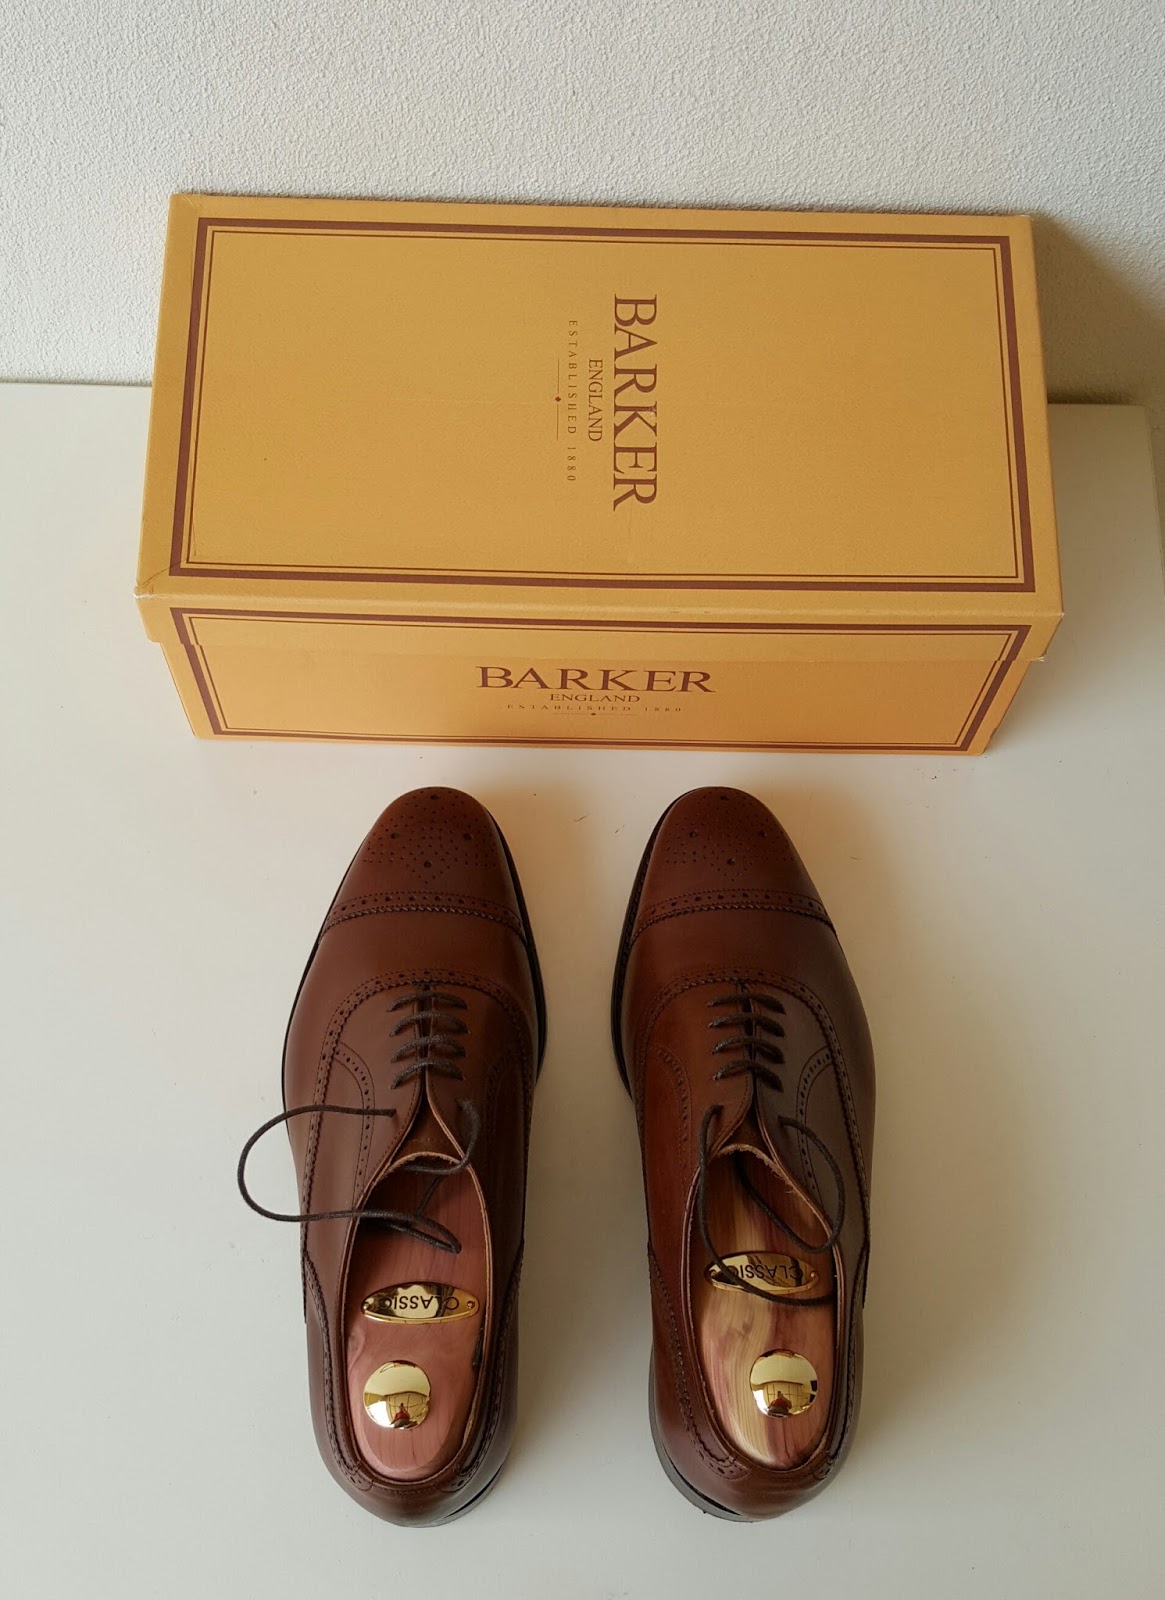 barker newcastle shoes